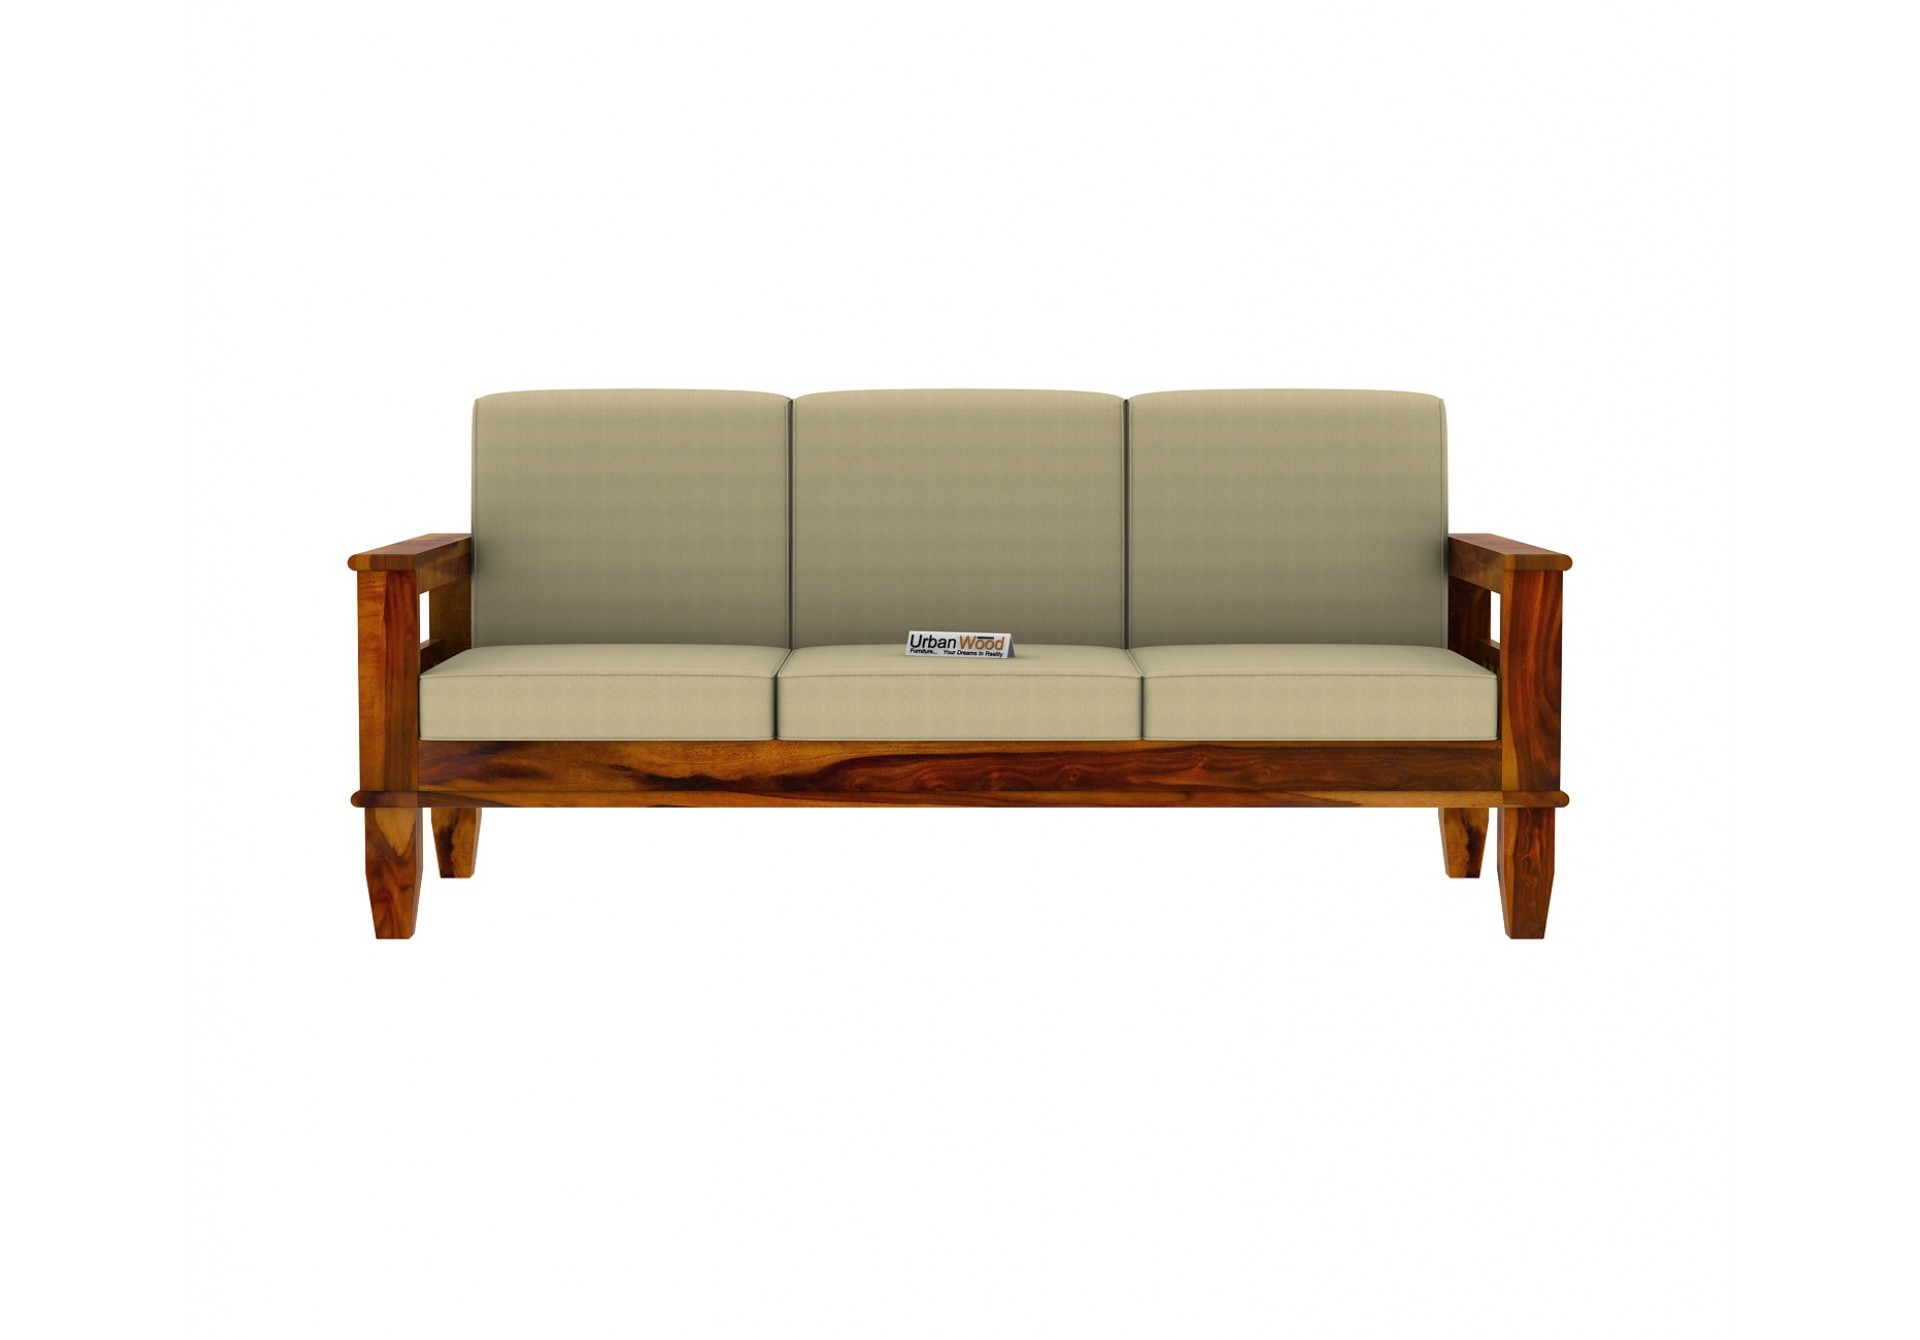 Freshlyn 3 Seater Wooden Sofa 